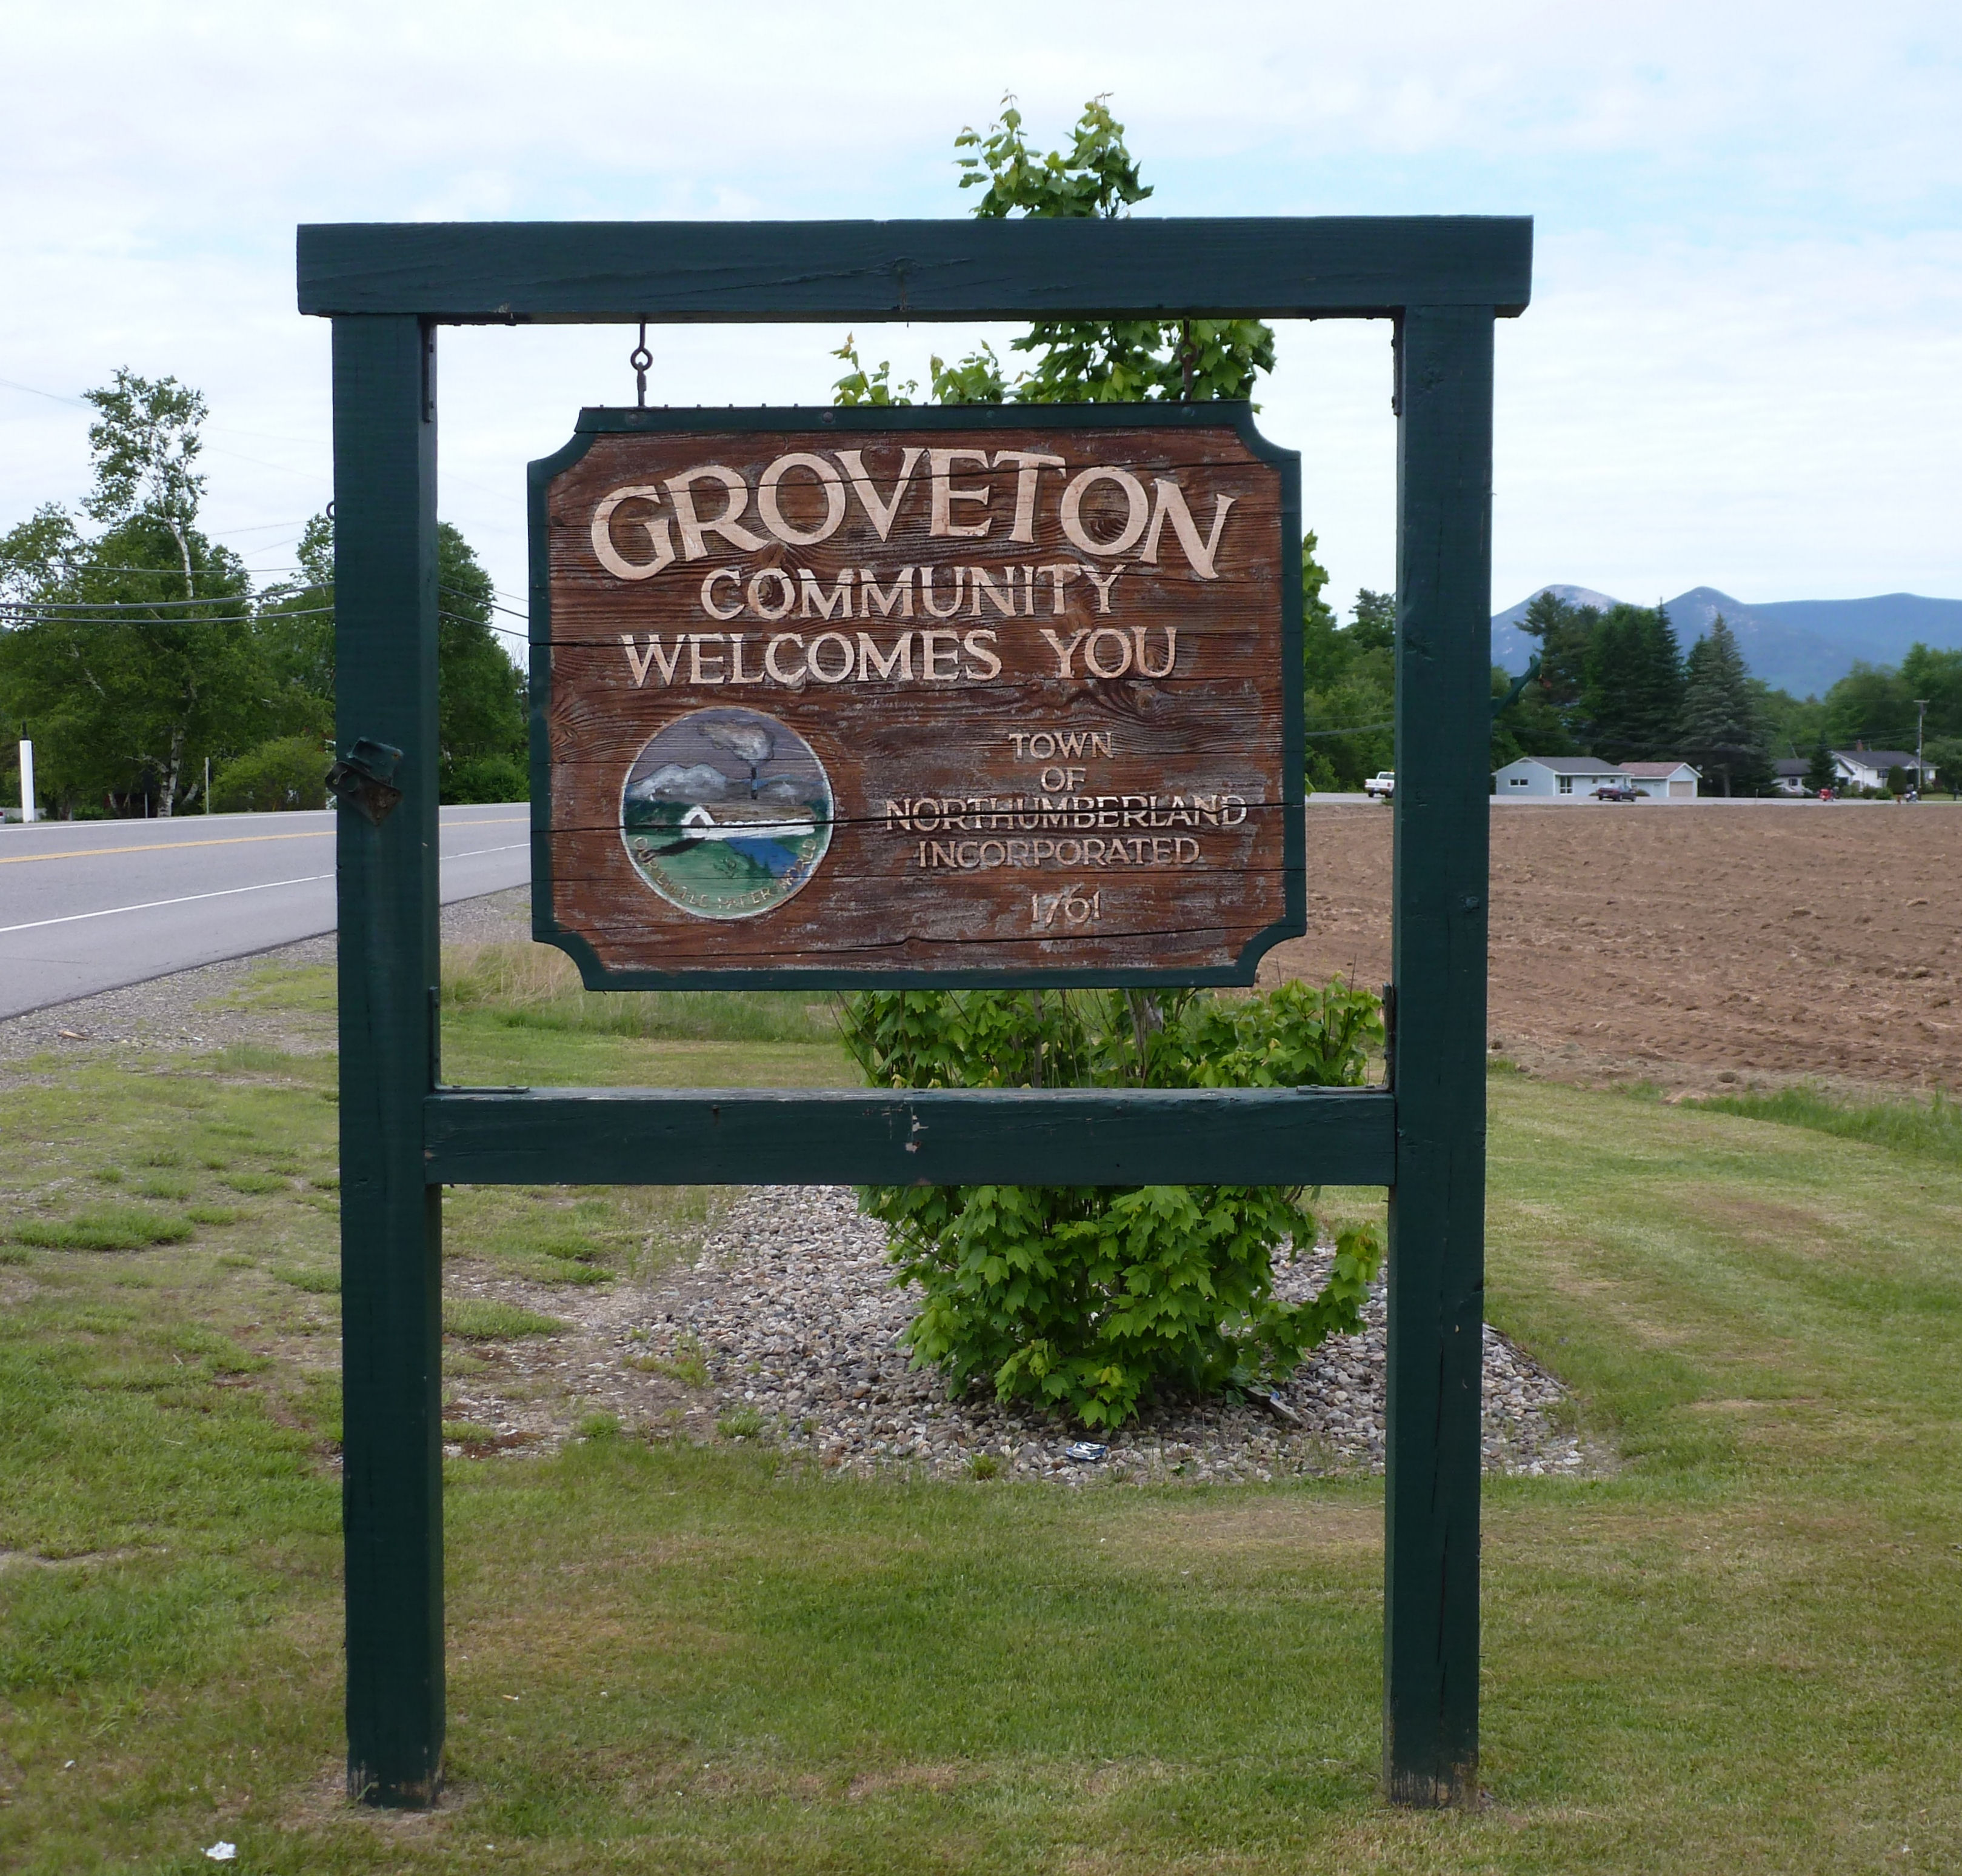 Groveton, New Hampshire